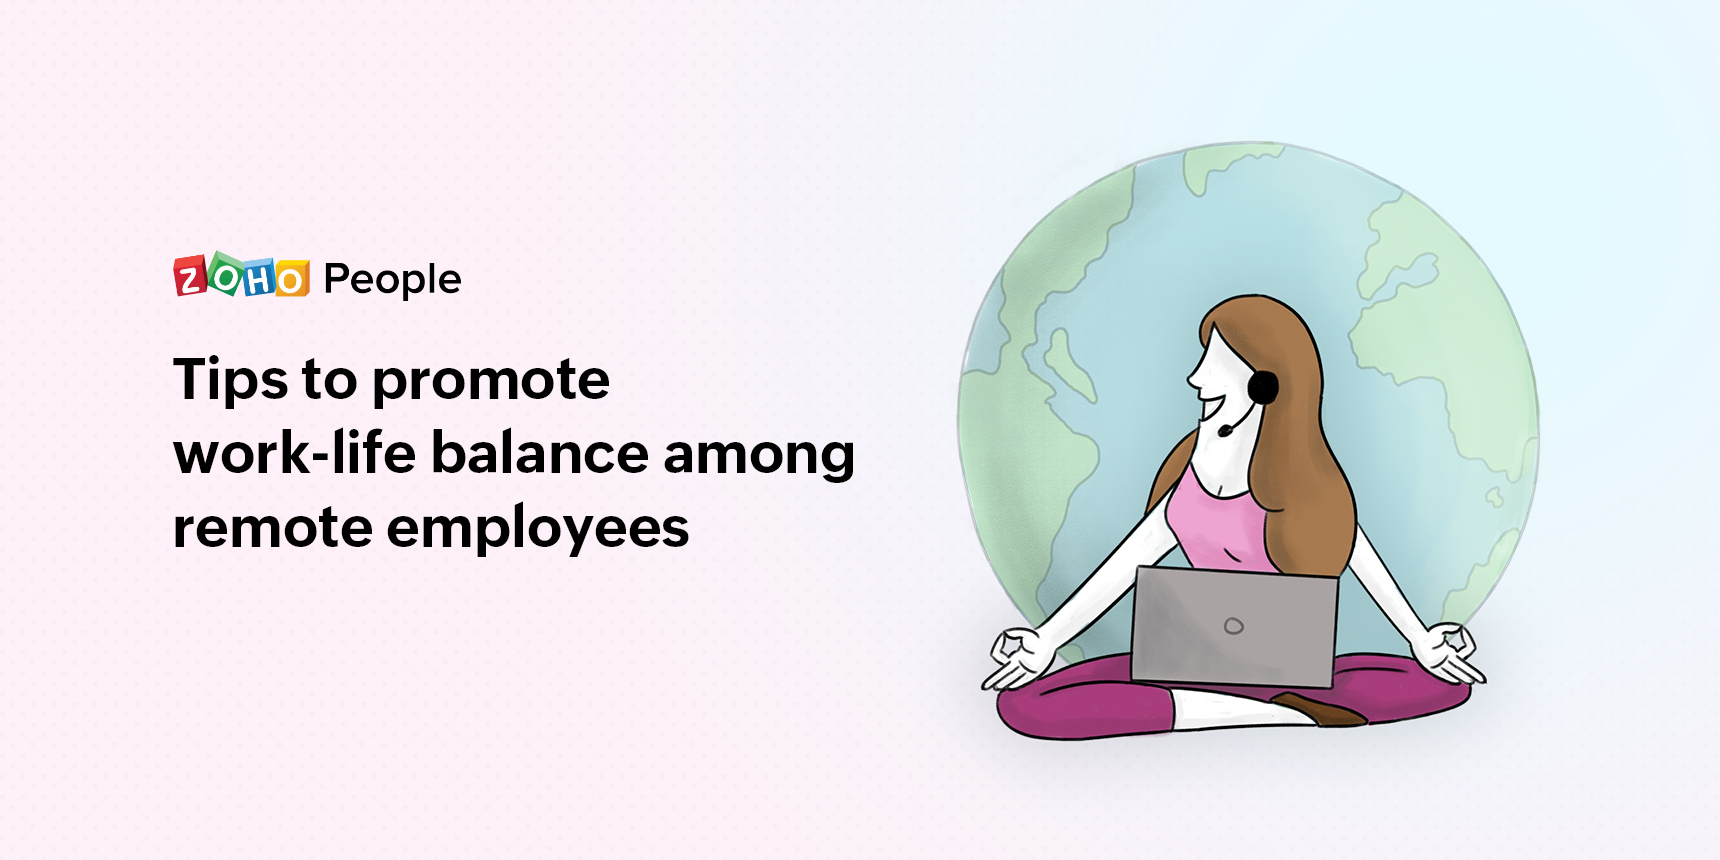 Promoting work-life balance among remote employees